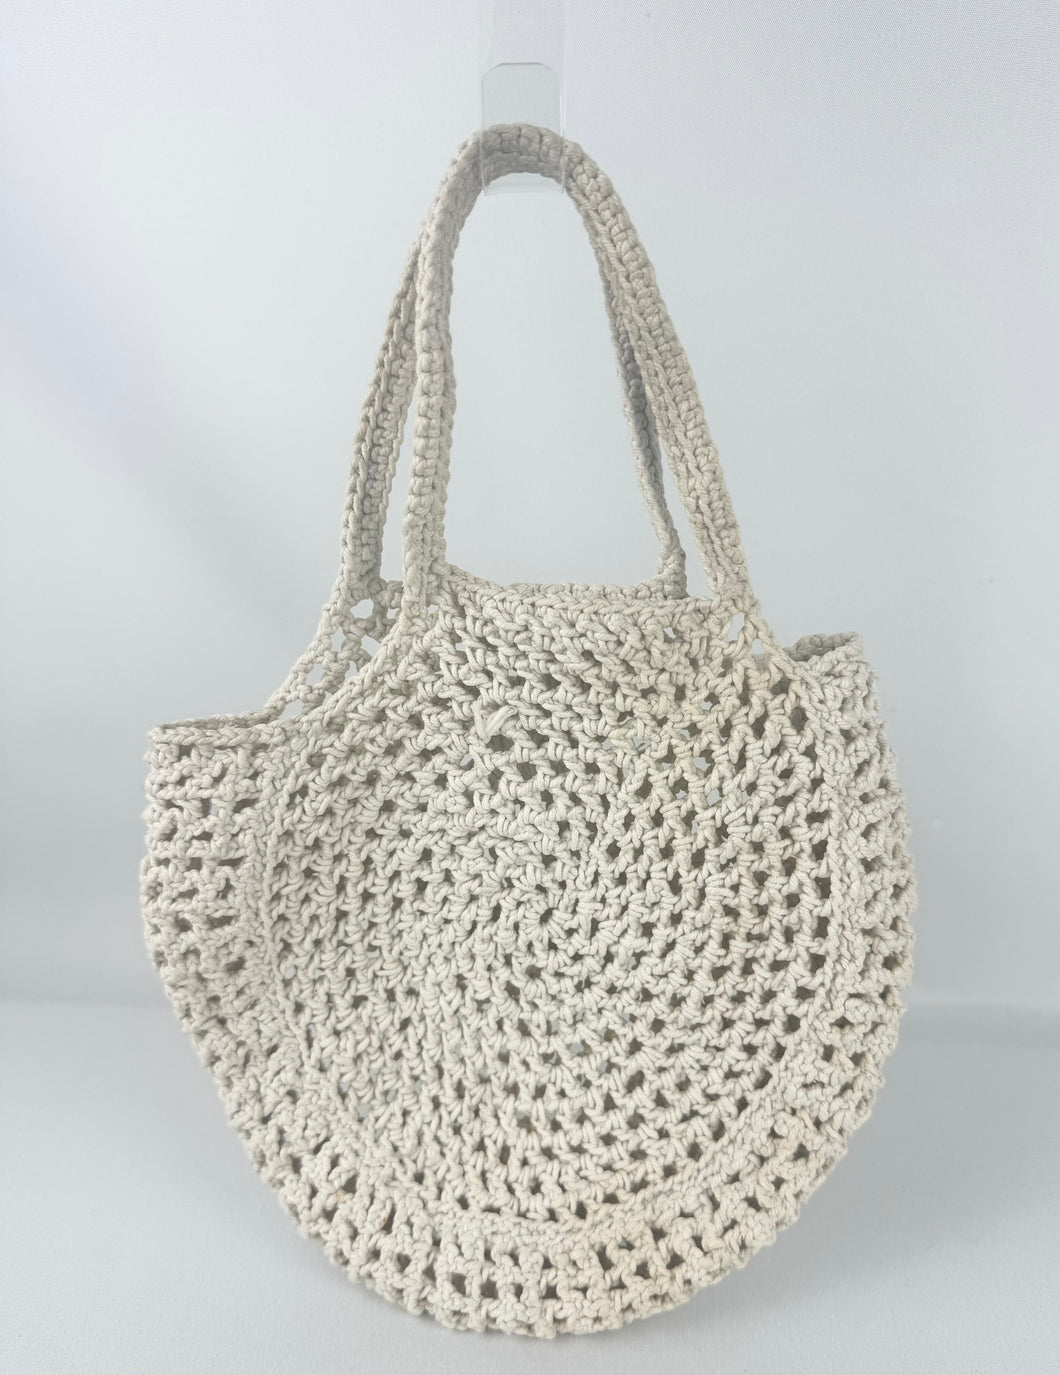 Original 1940's 1950's Ivory Coloured String Crochet Handbag